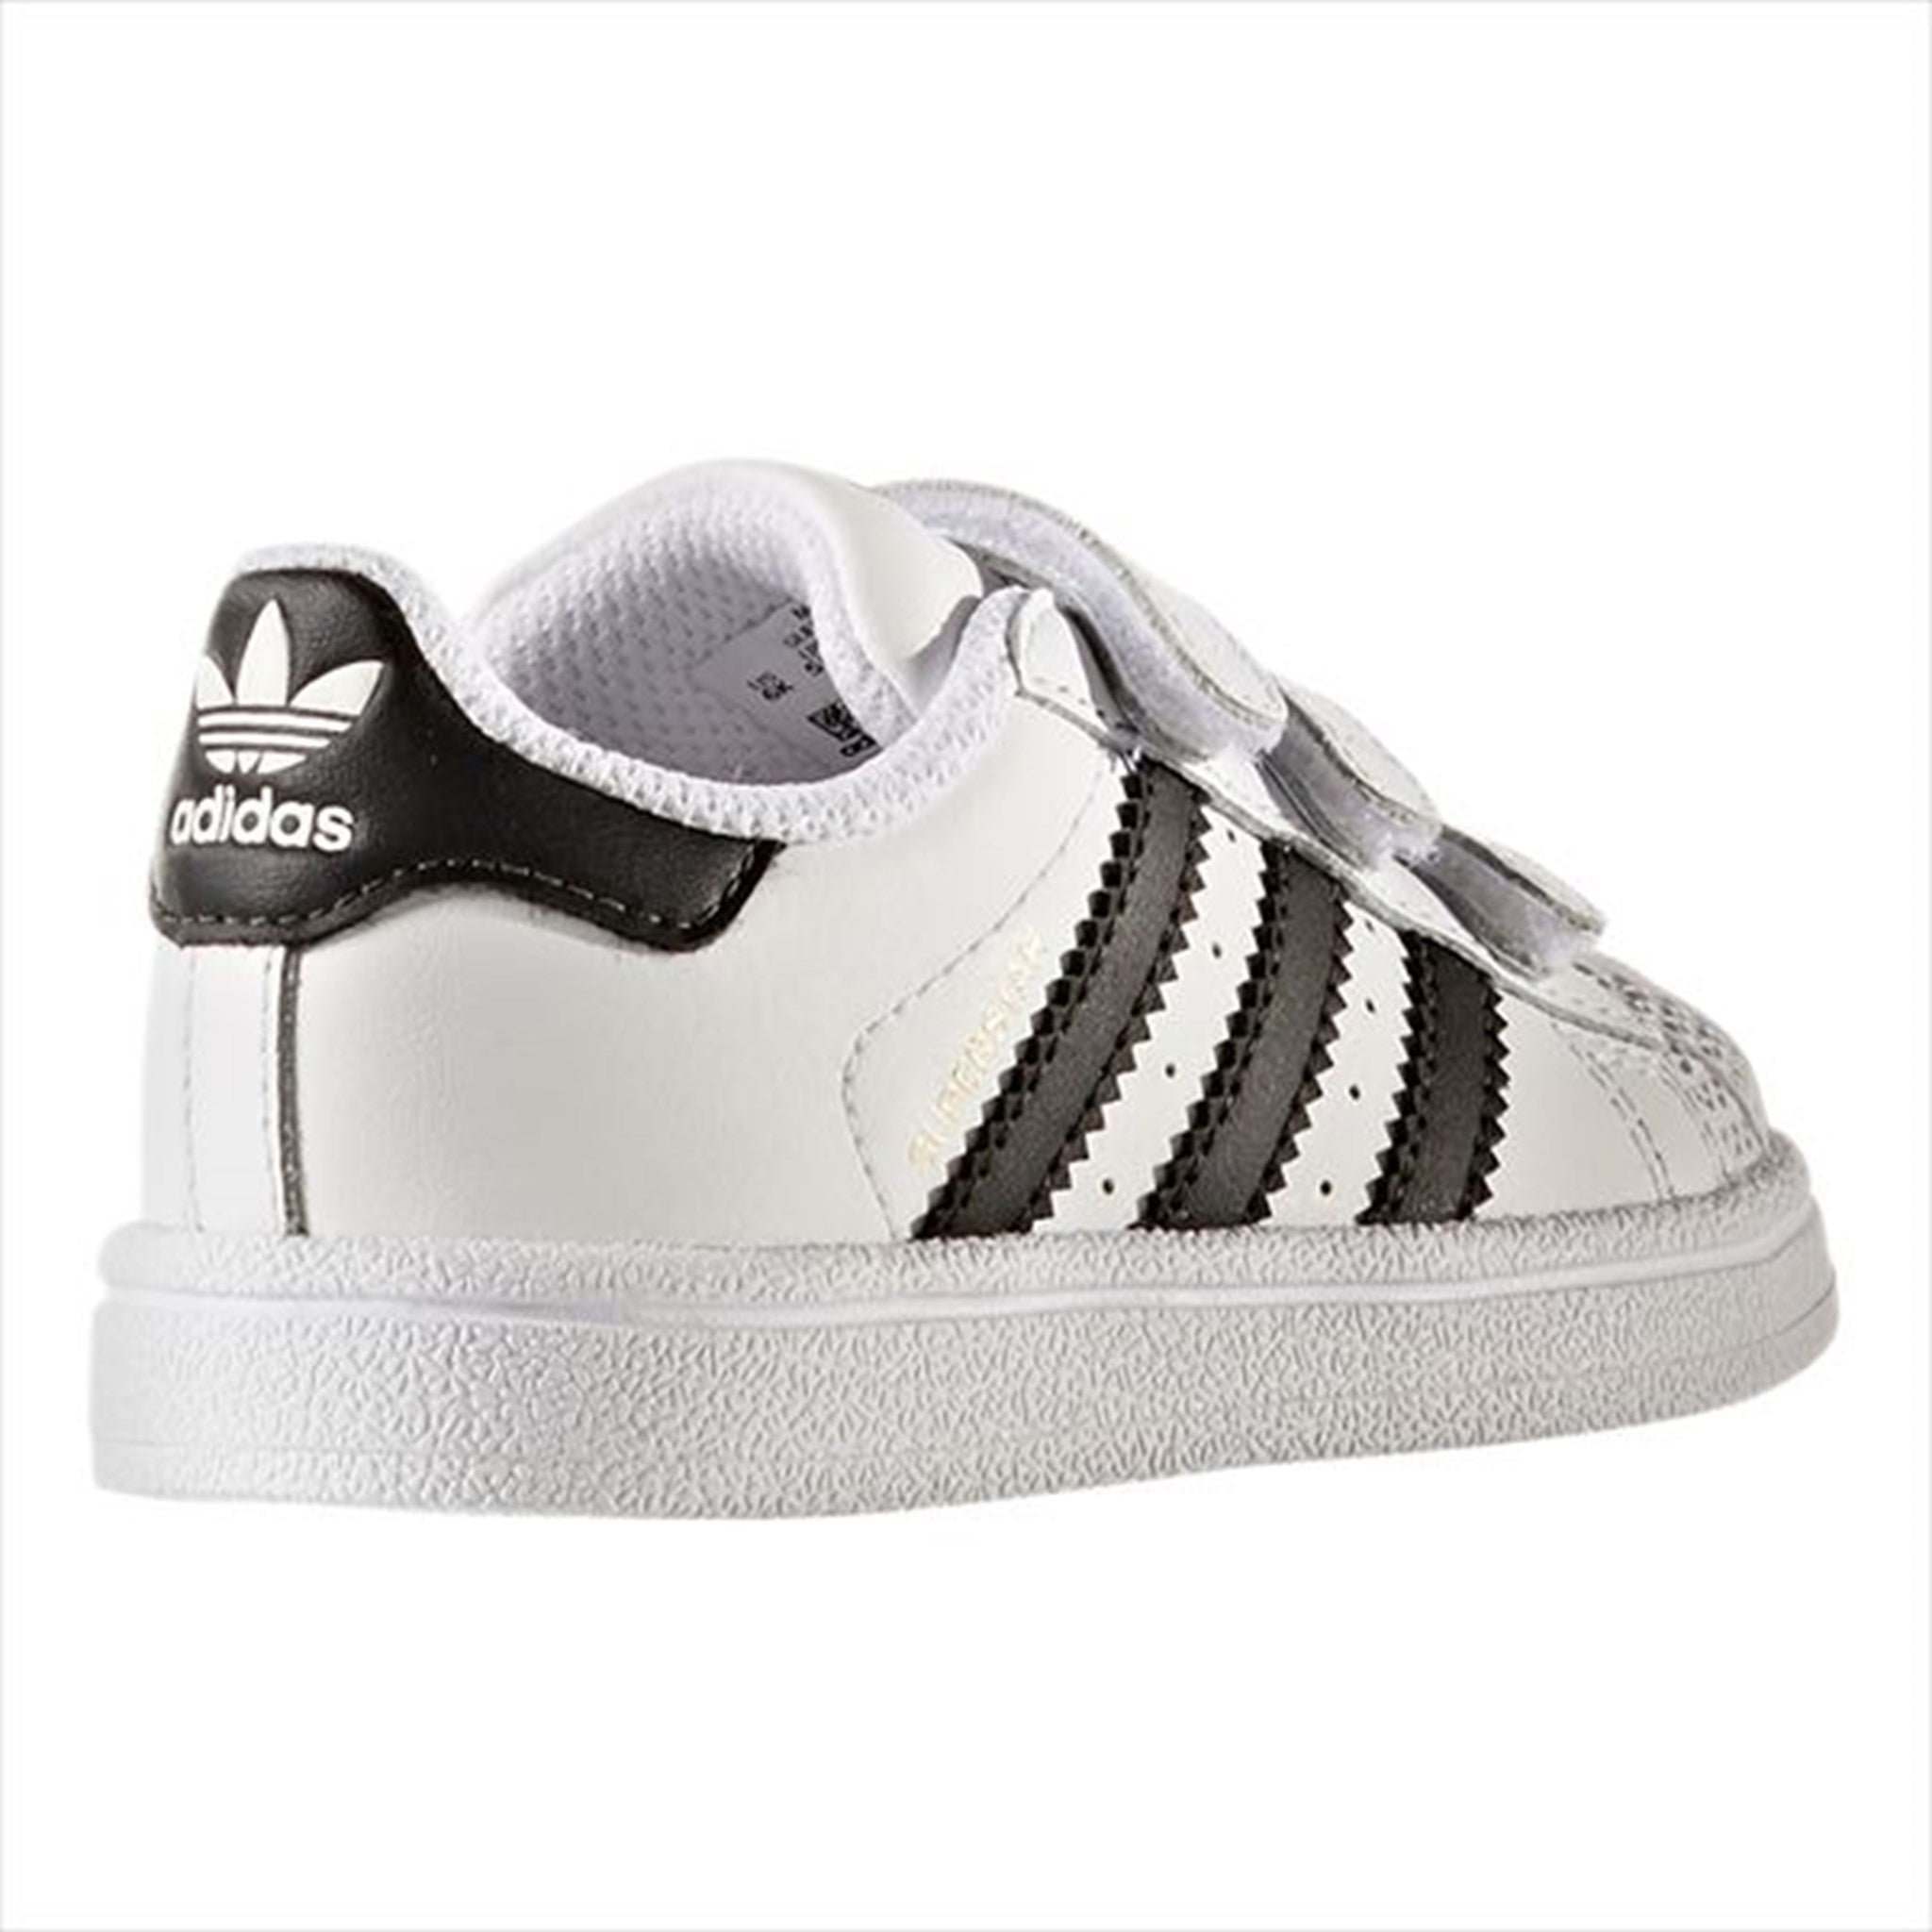 adidas Superstar Sneakers White/Black 2